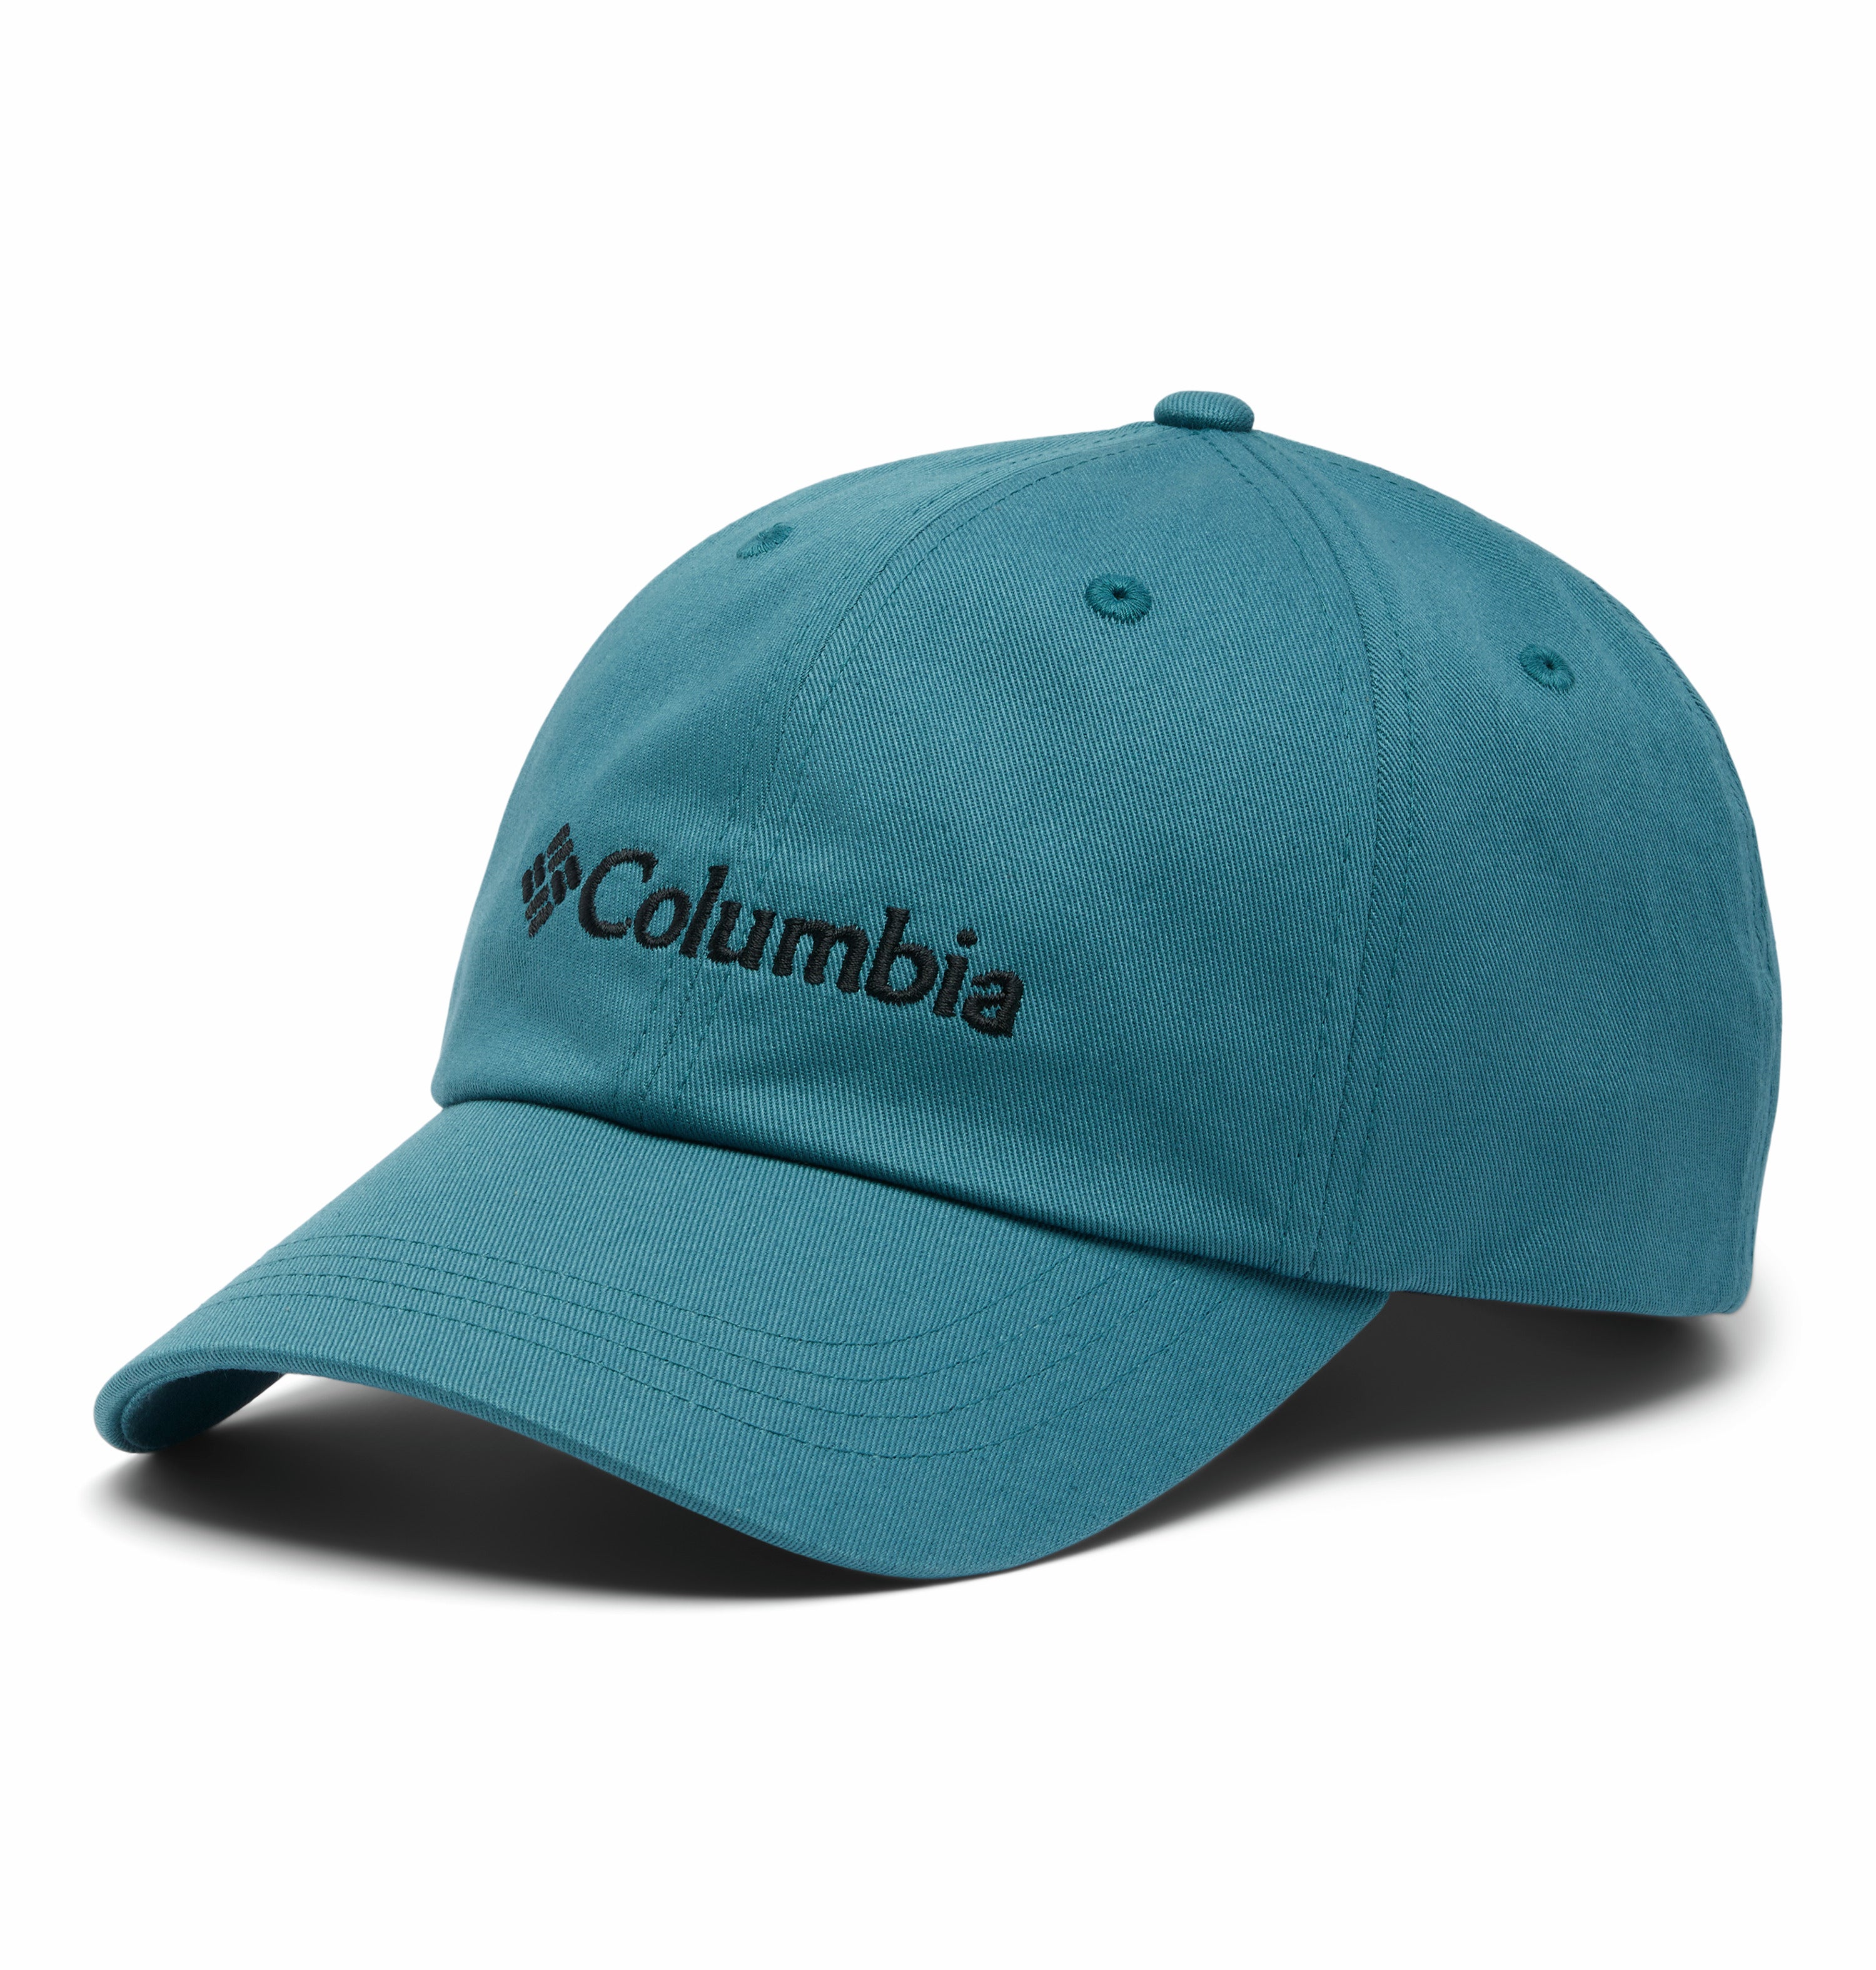 Columbia accessories